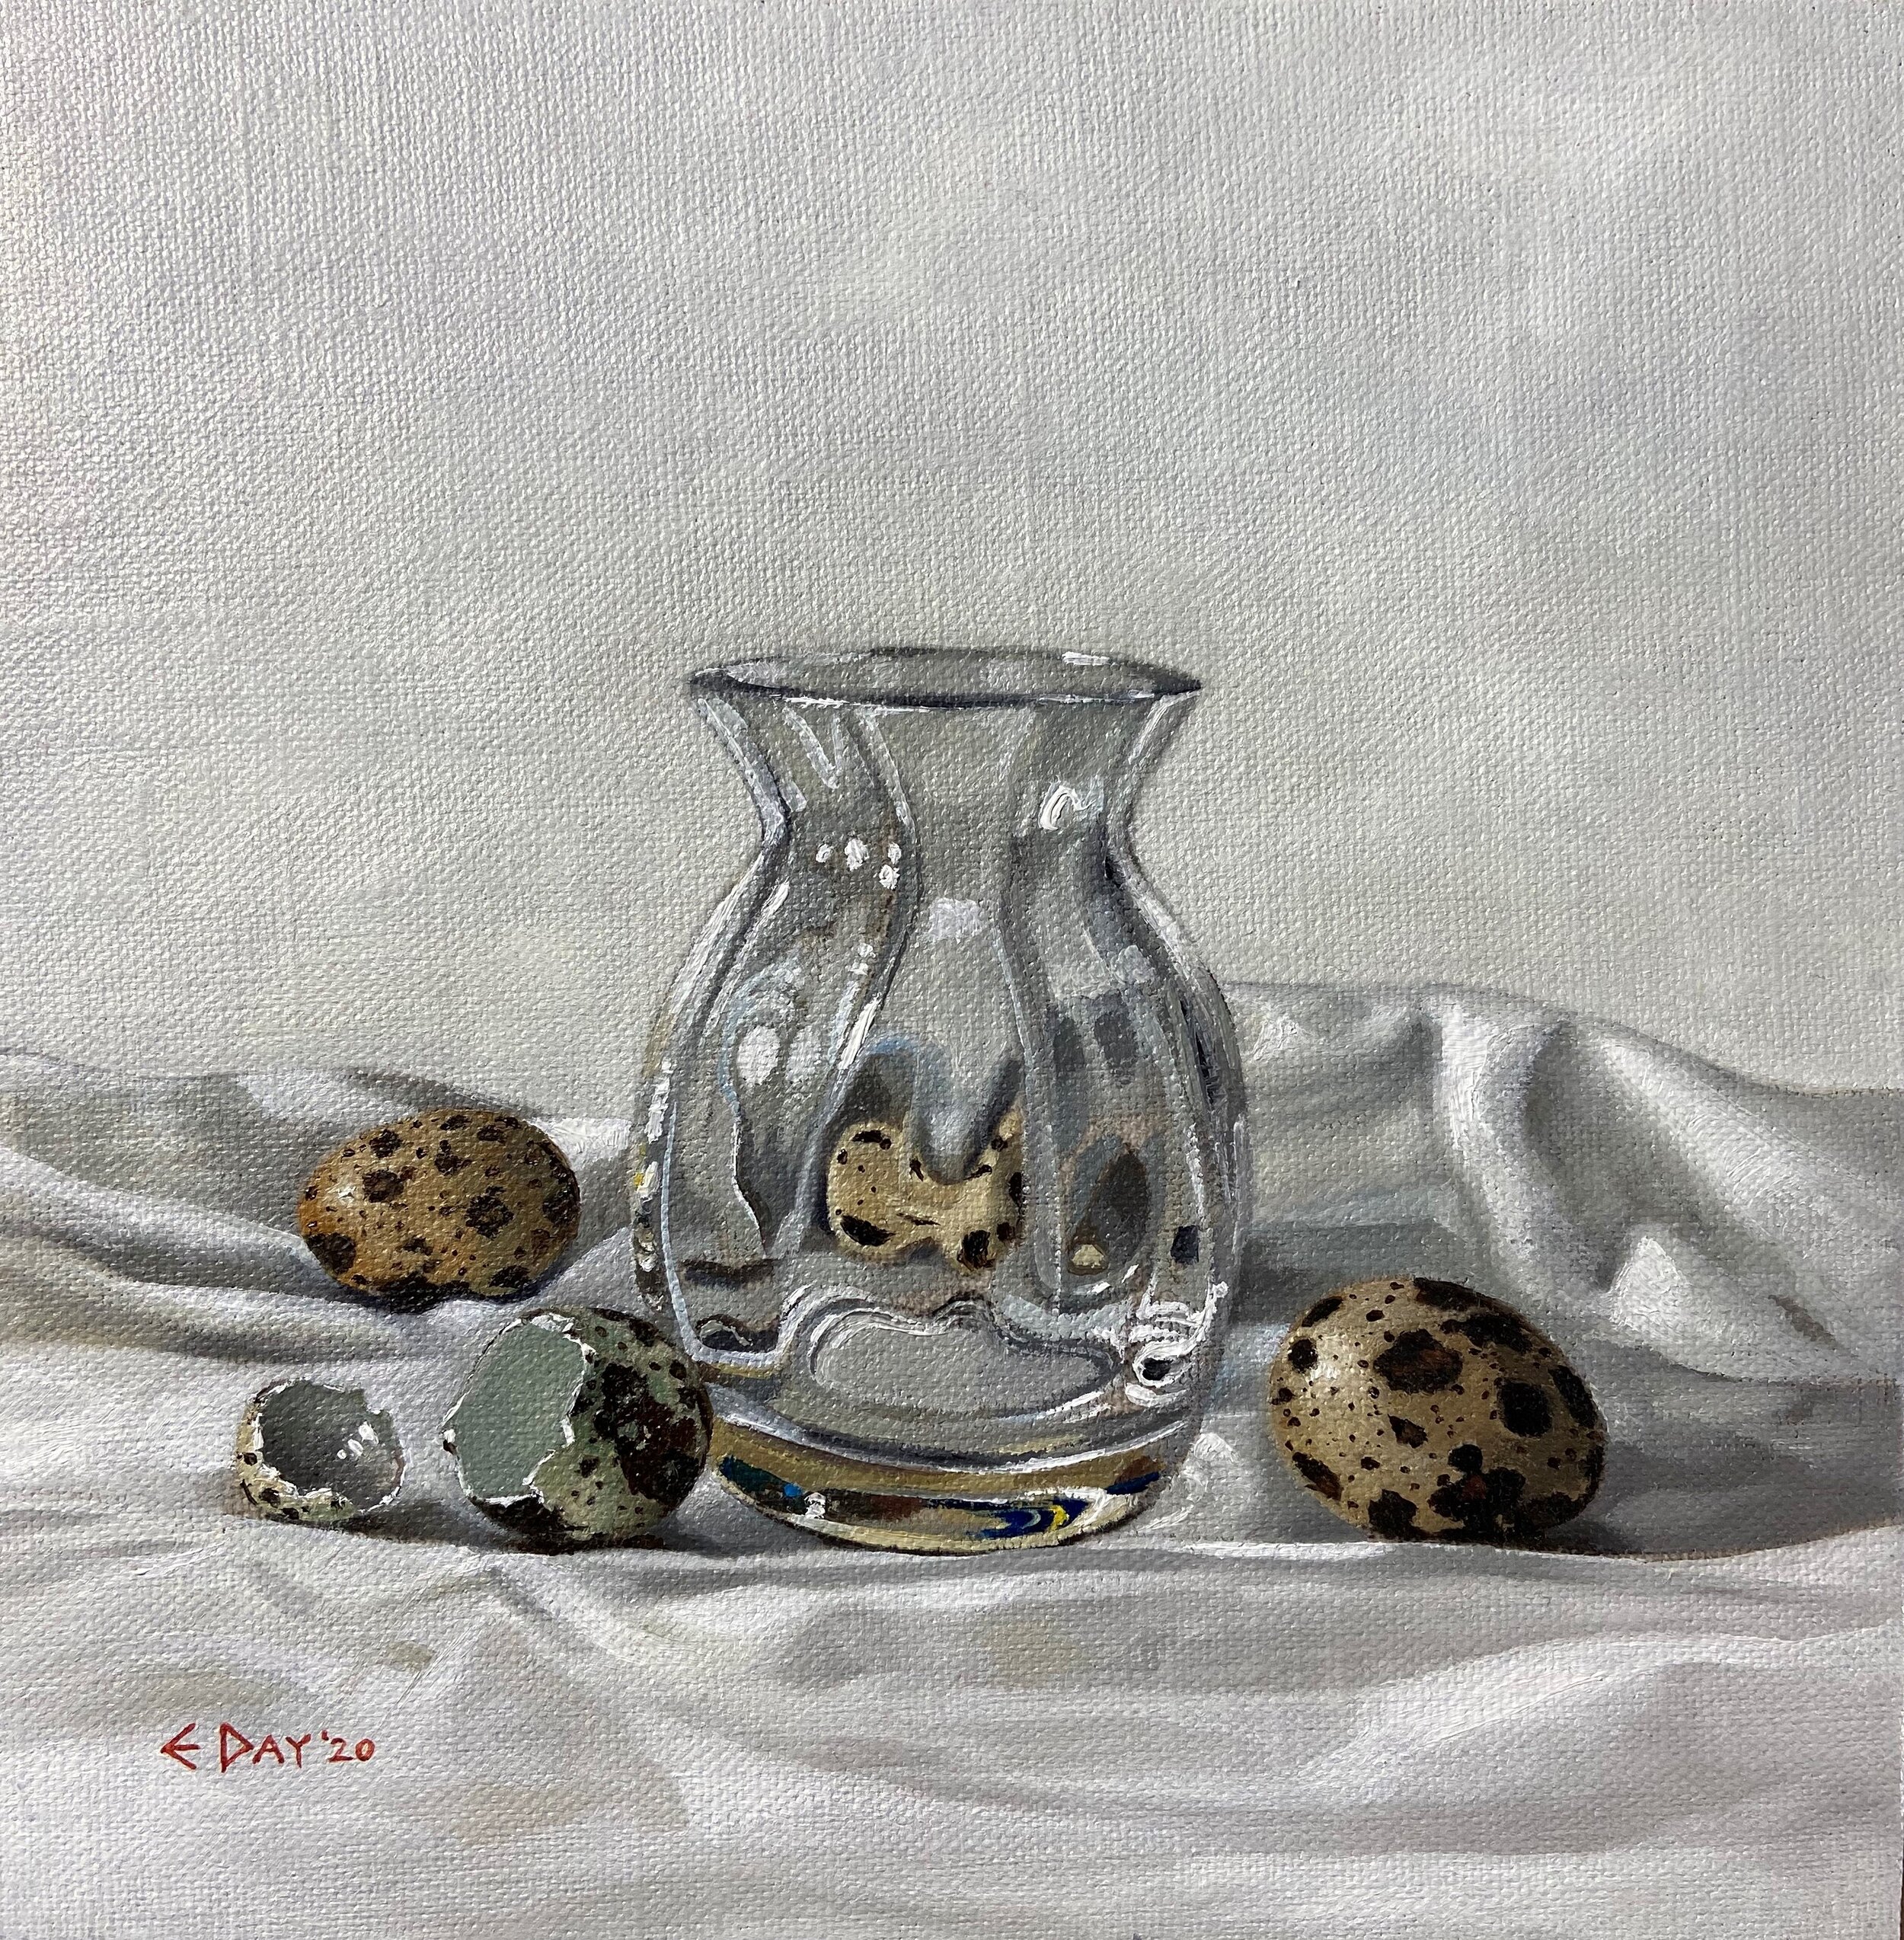 Crystal vase and quail eggs